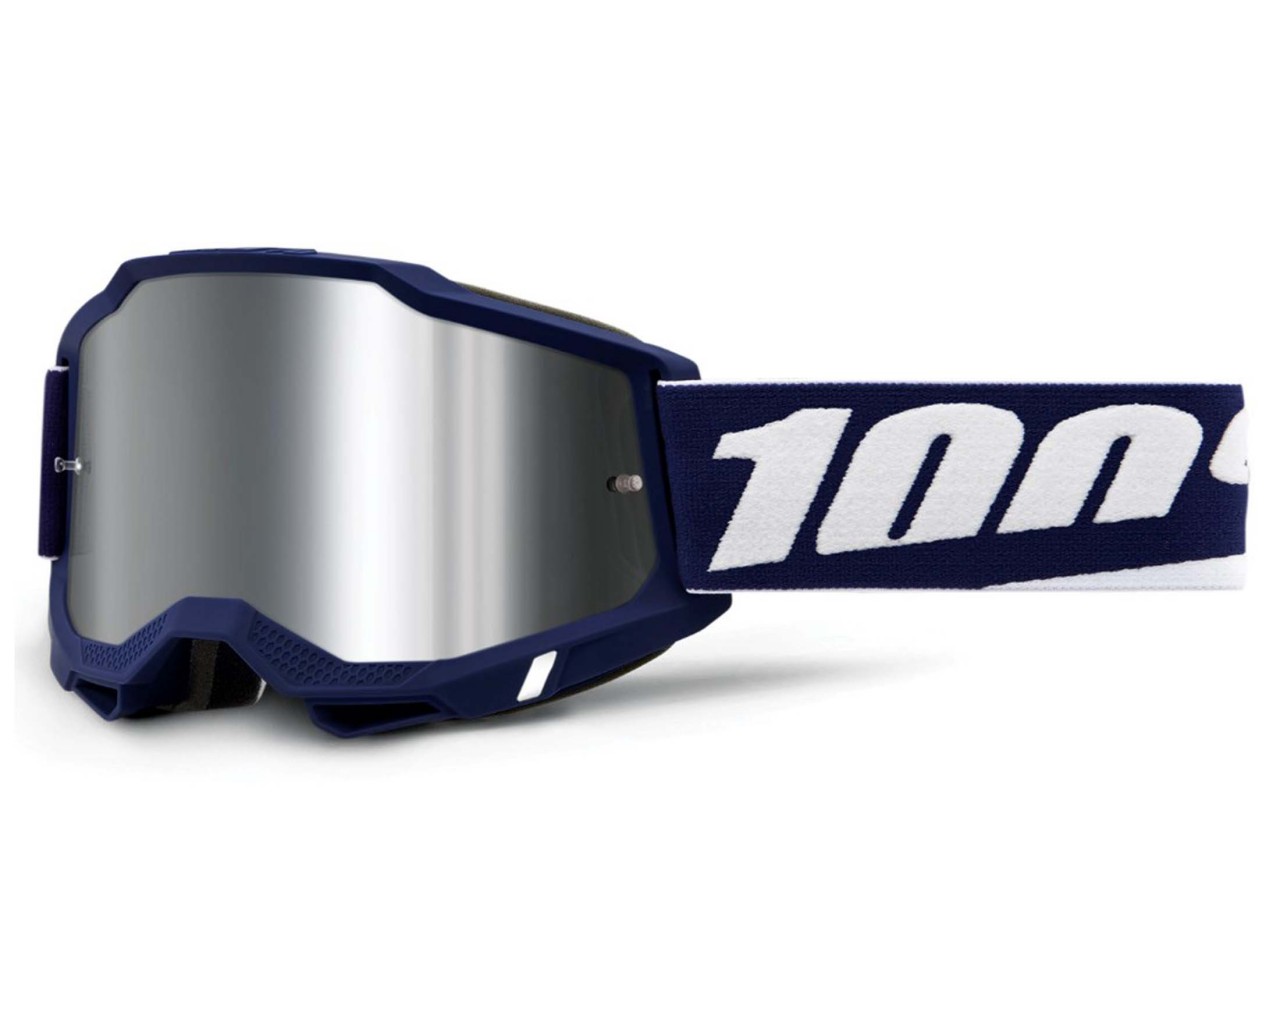 100% Accuri 2 Goggle - Spiegelglas Sportbrille | mifflin